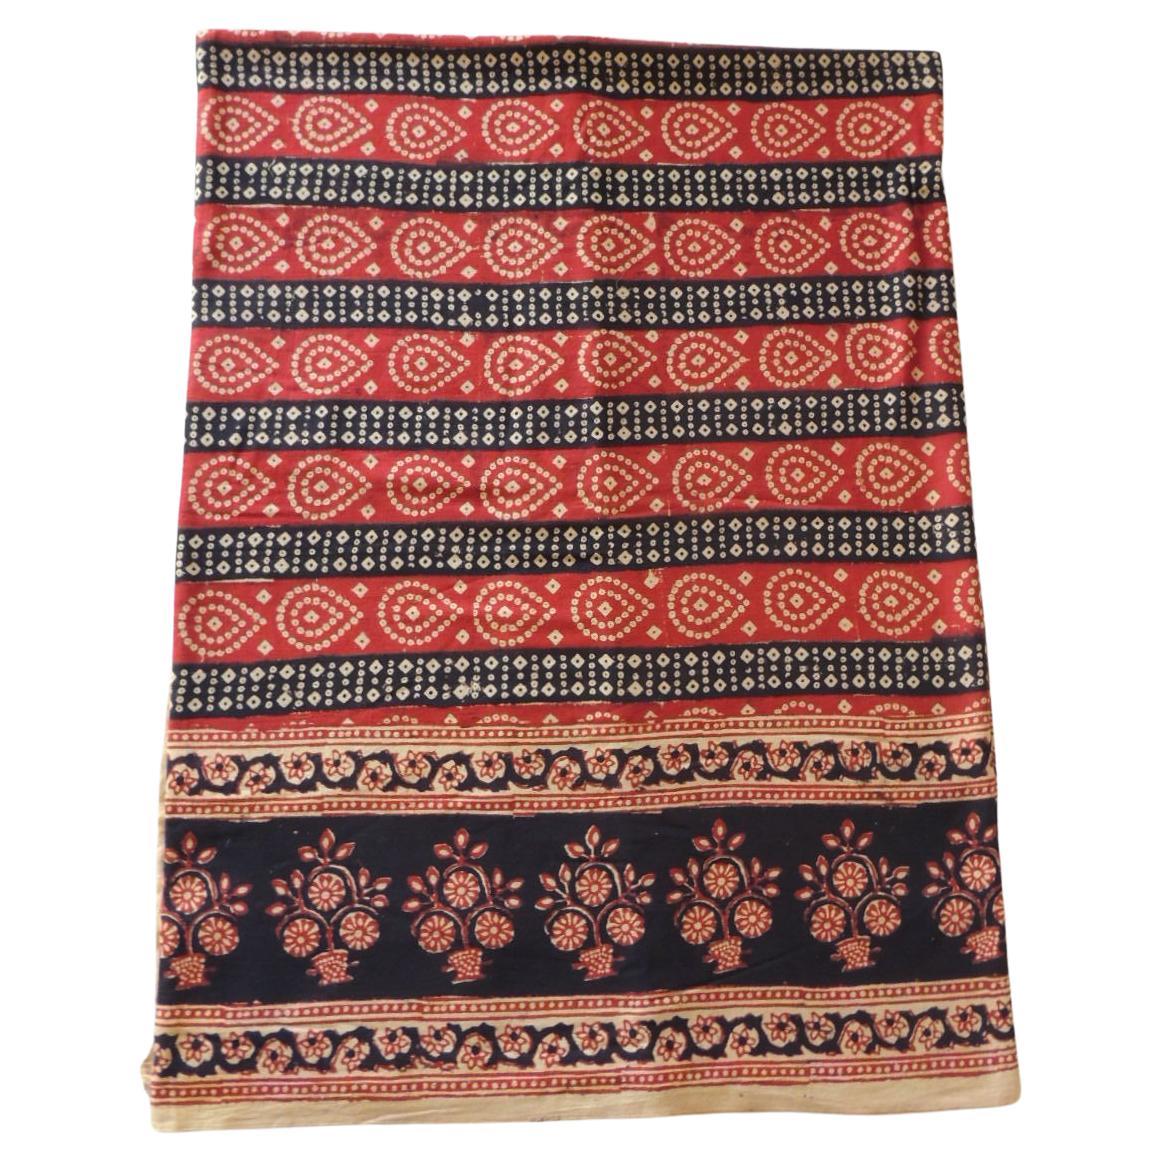 Indian Cloth #2